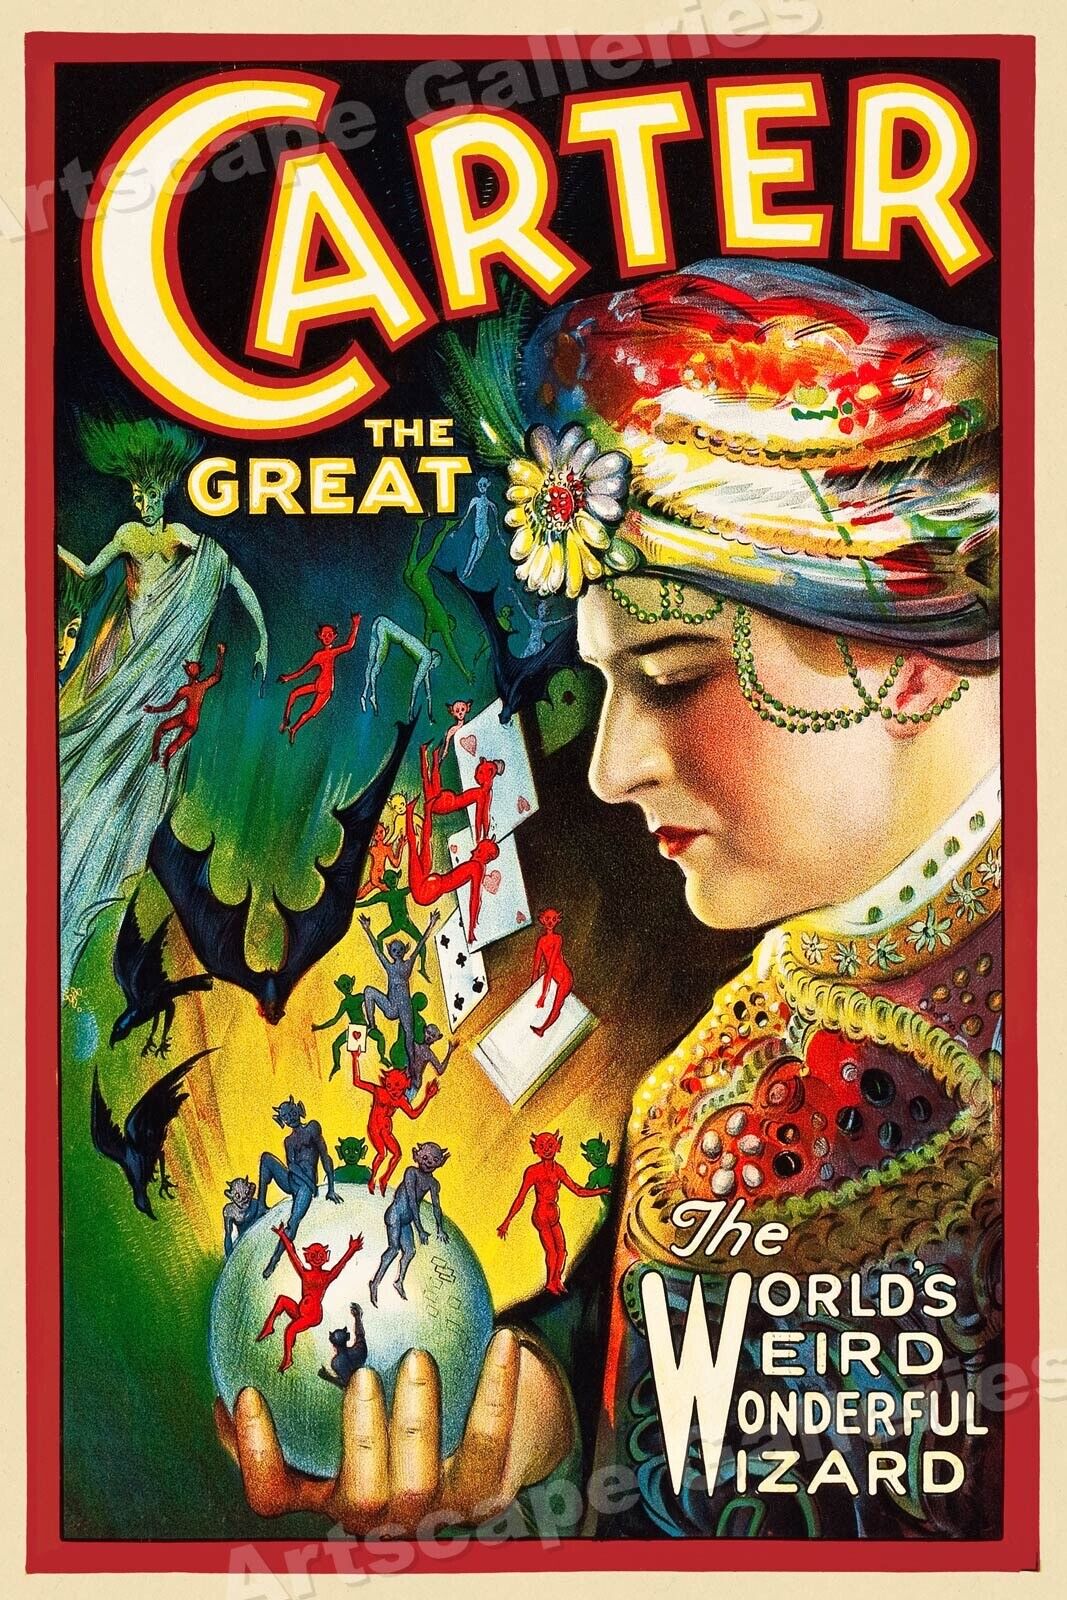 1920 Carter the Great Classic Wizard Magic Poster Print - 16x24